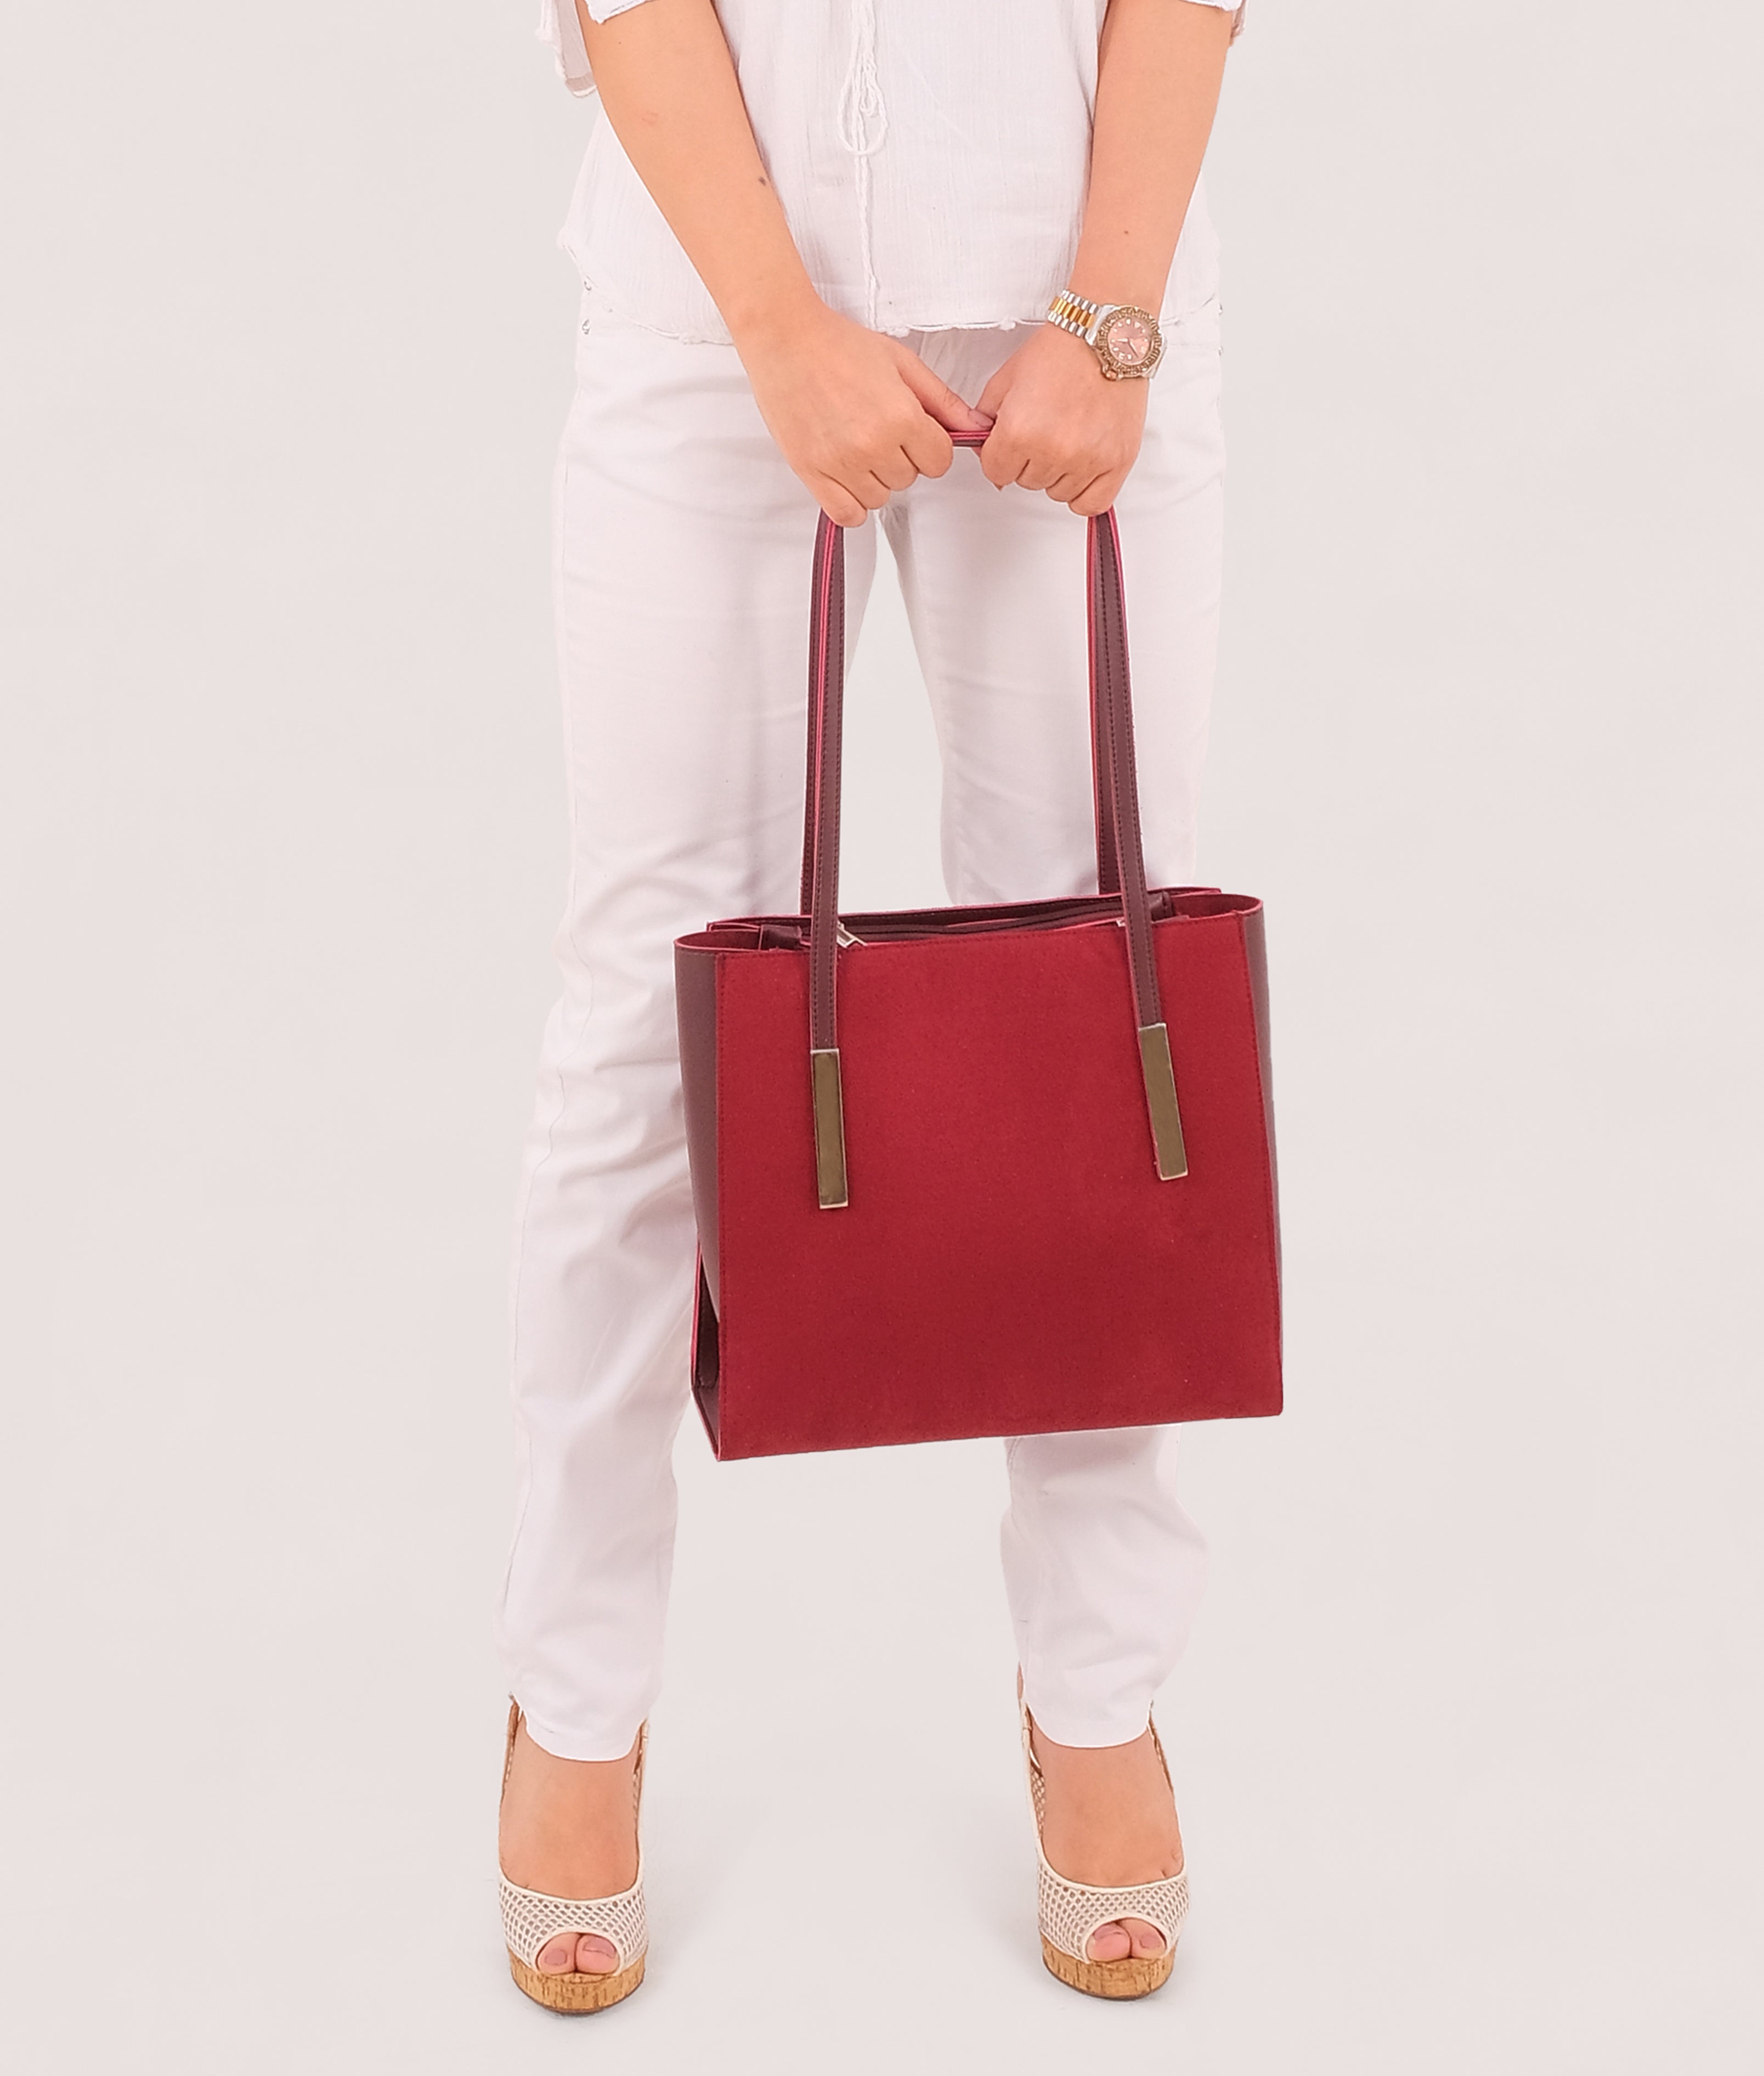 Burgundy suede zipper shoulder bag with long handle